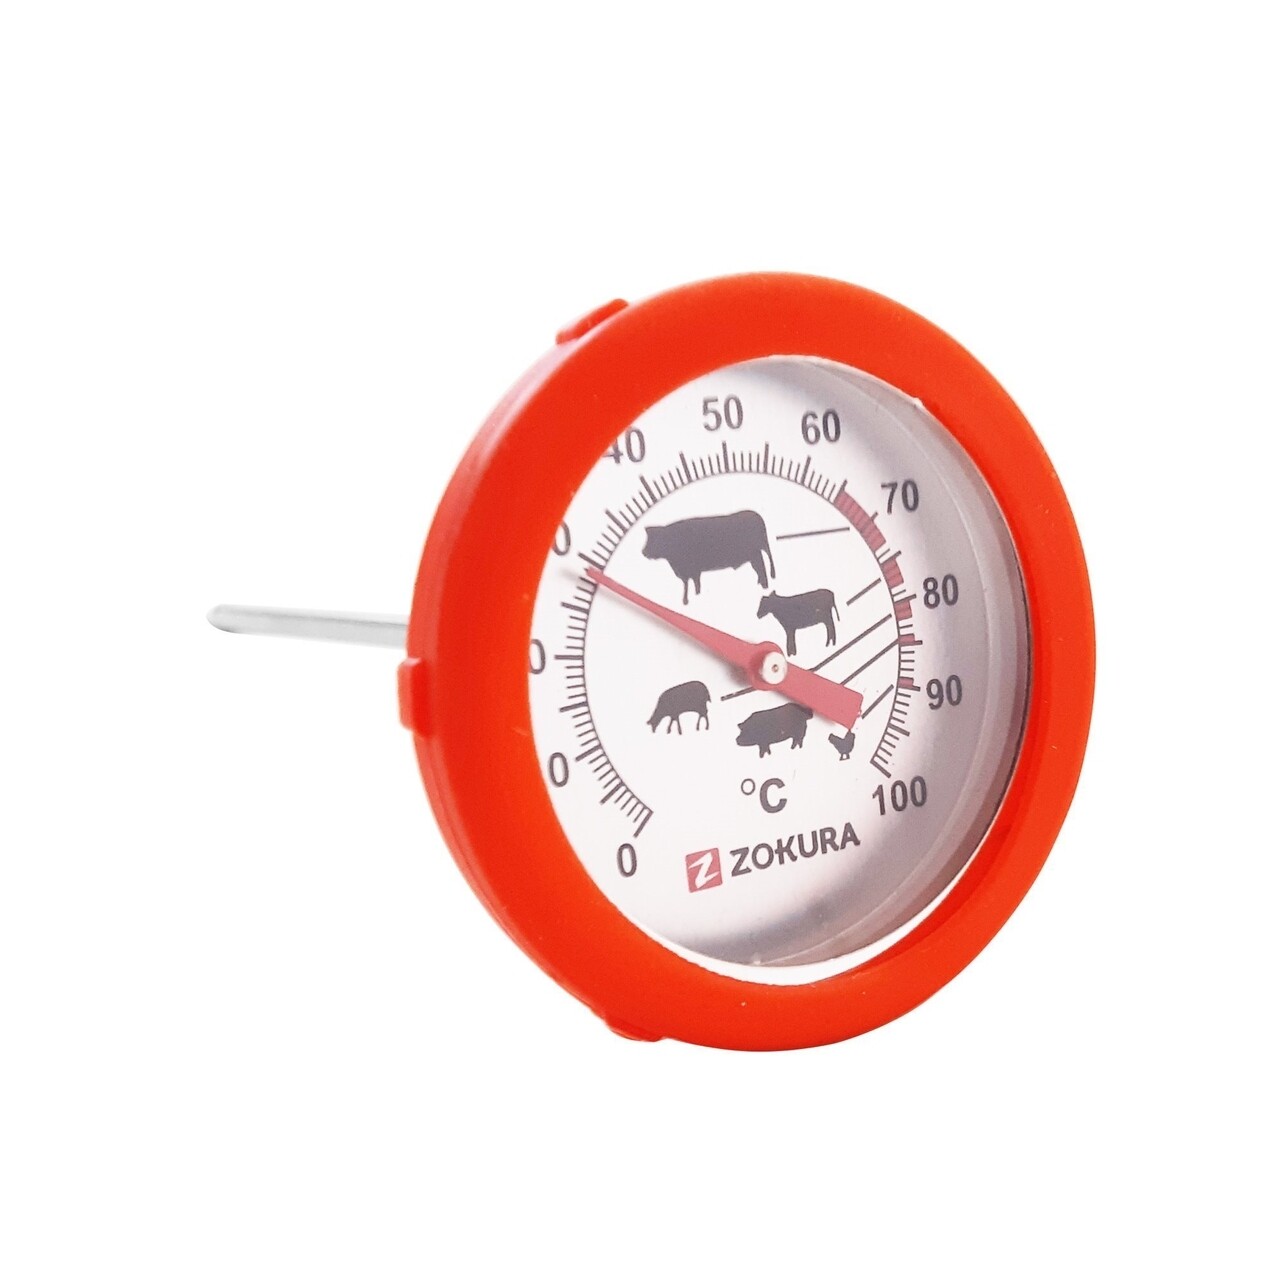 Termometru Pentru Friptura, Zokura, 0°C/100°C, Inox